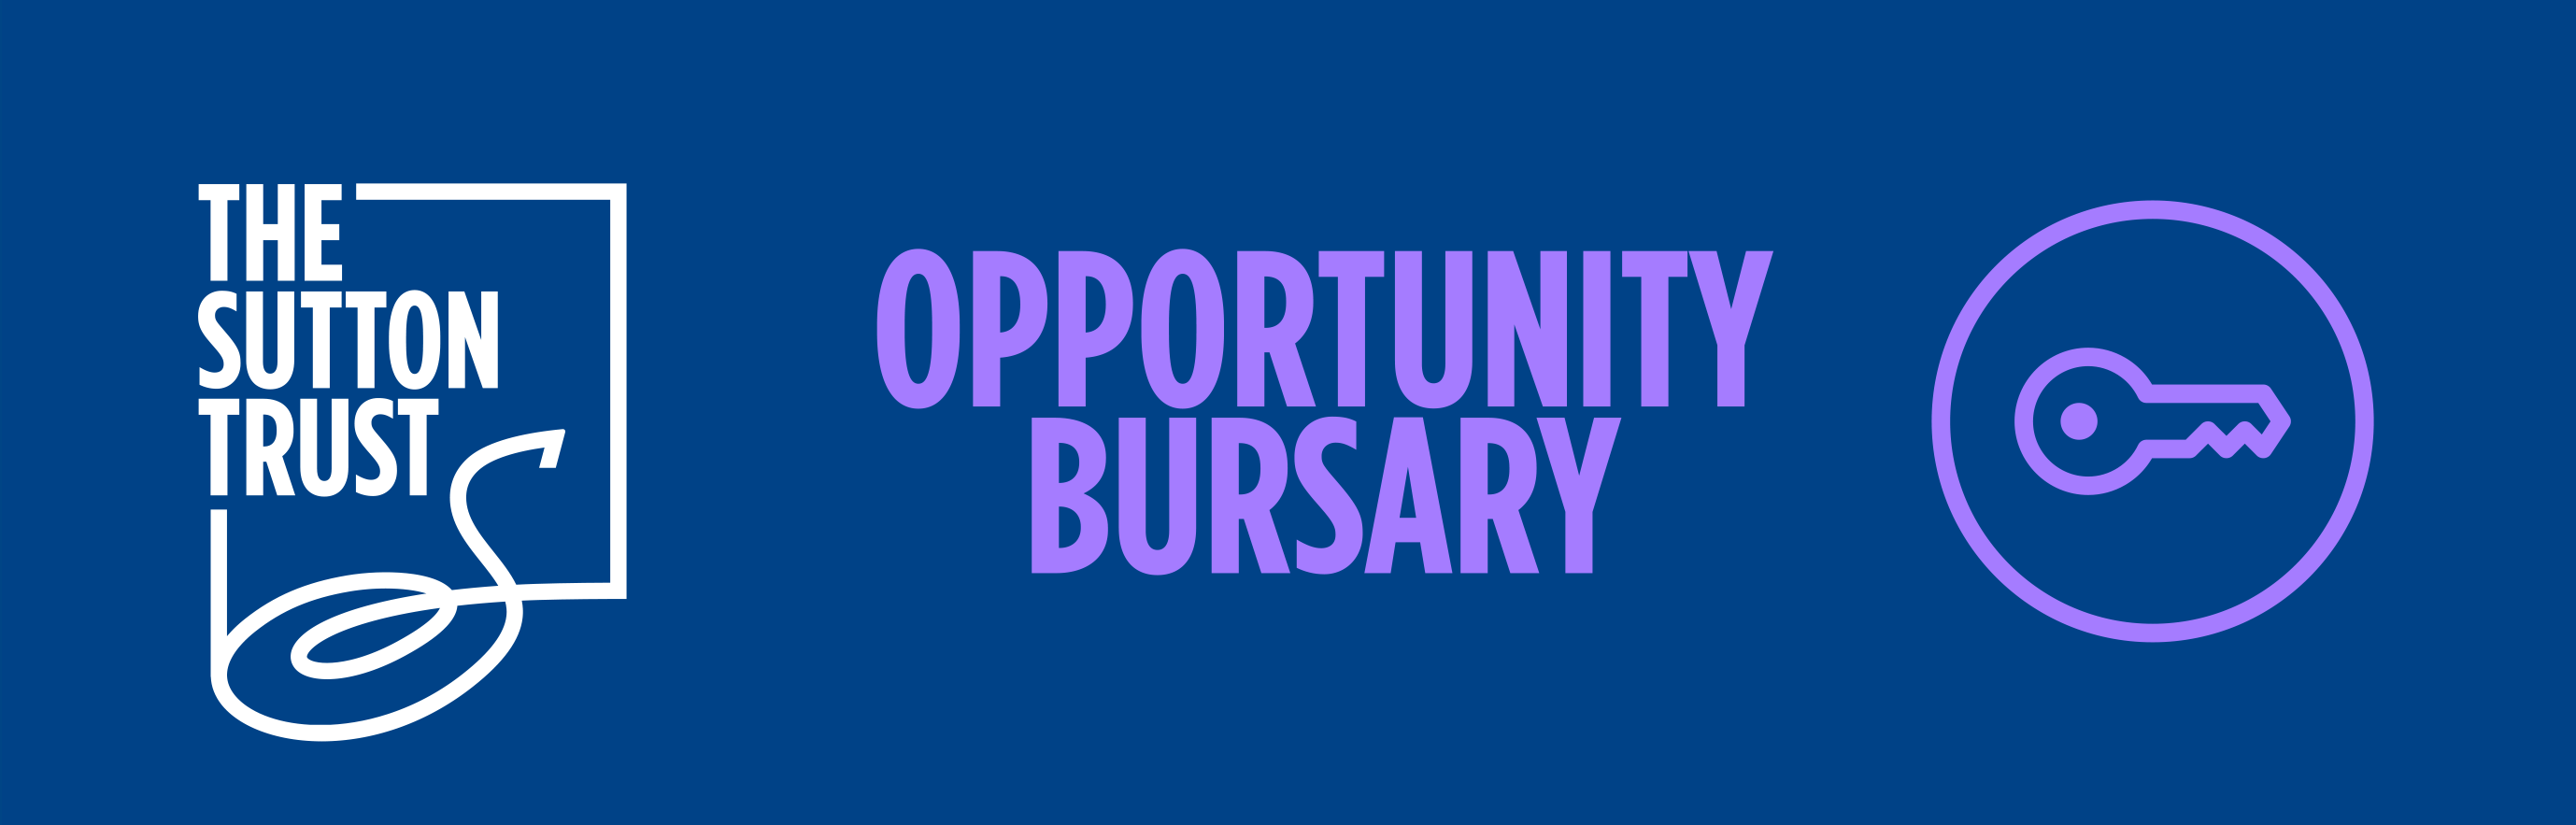 Opportunity Bursary logo